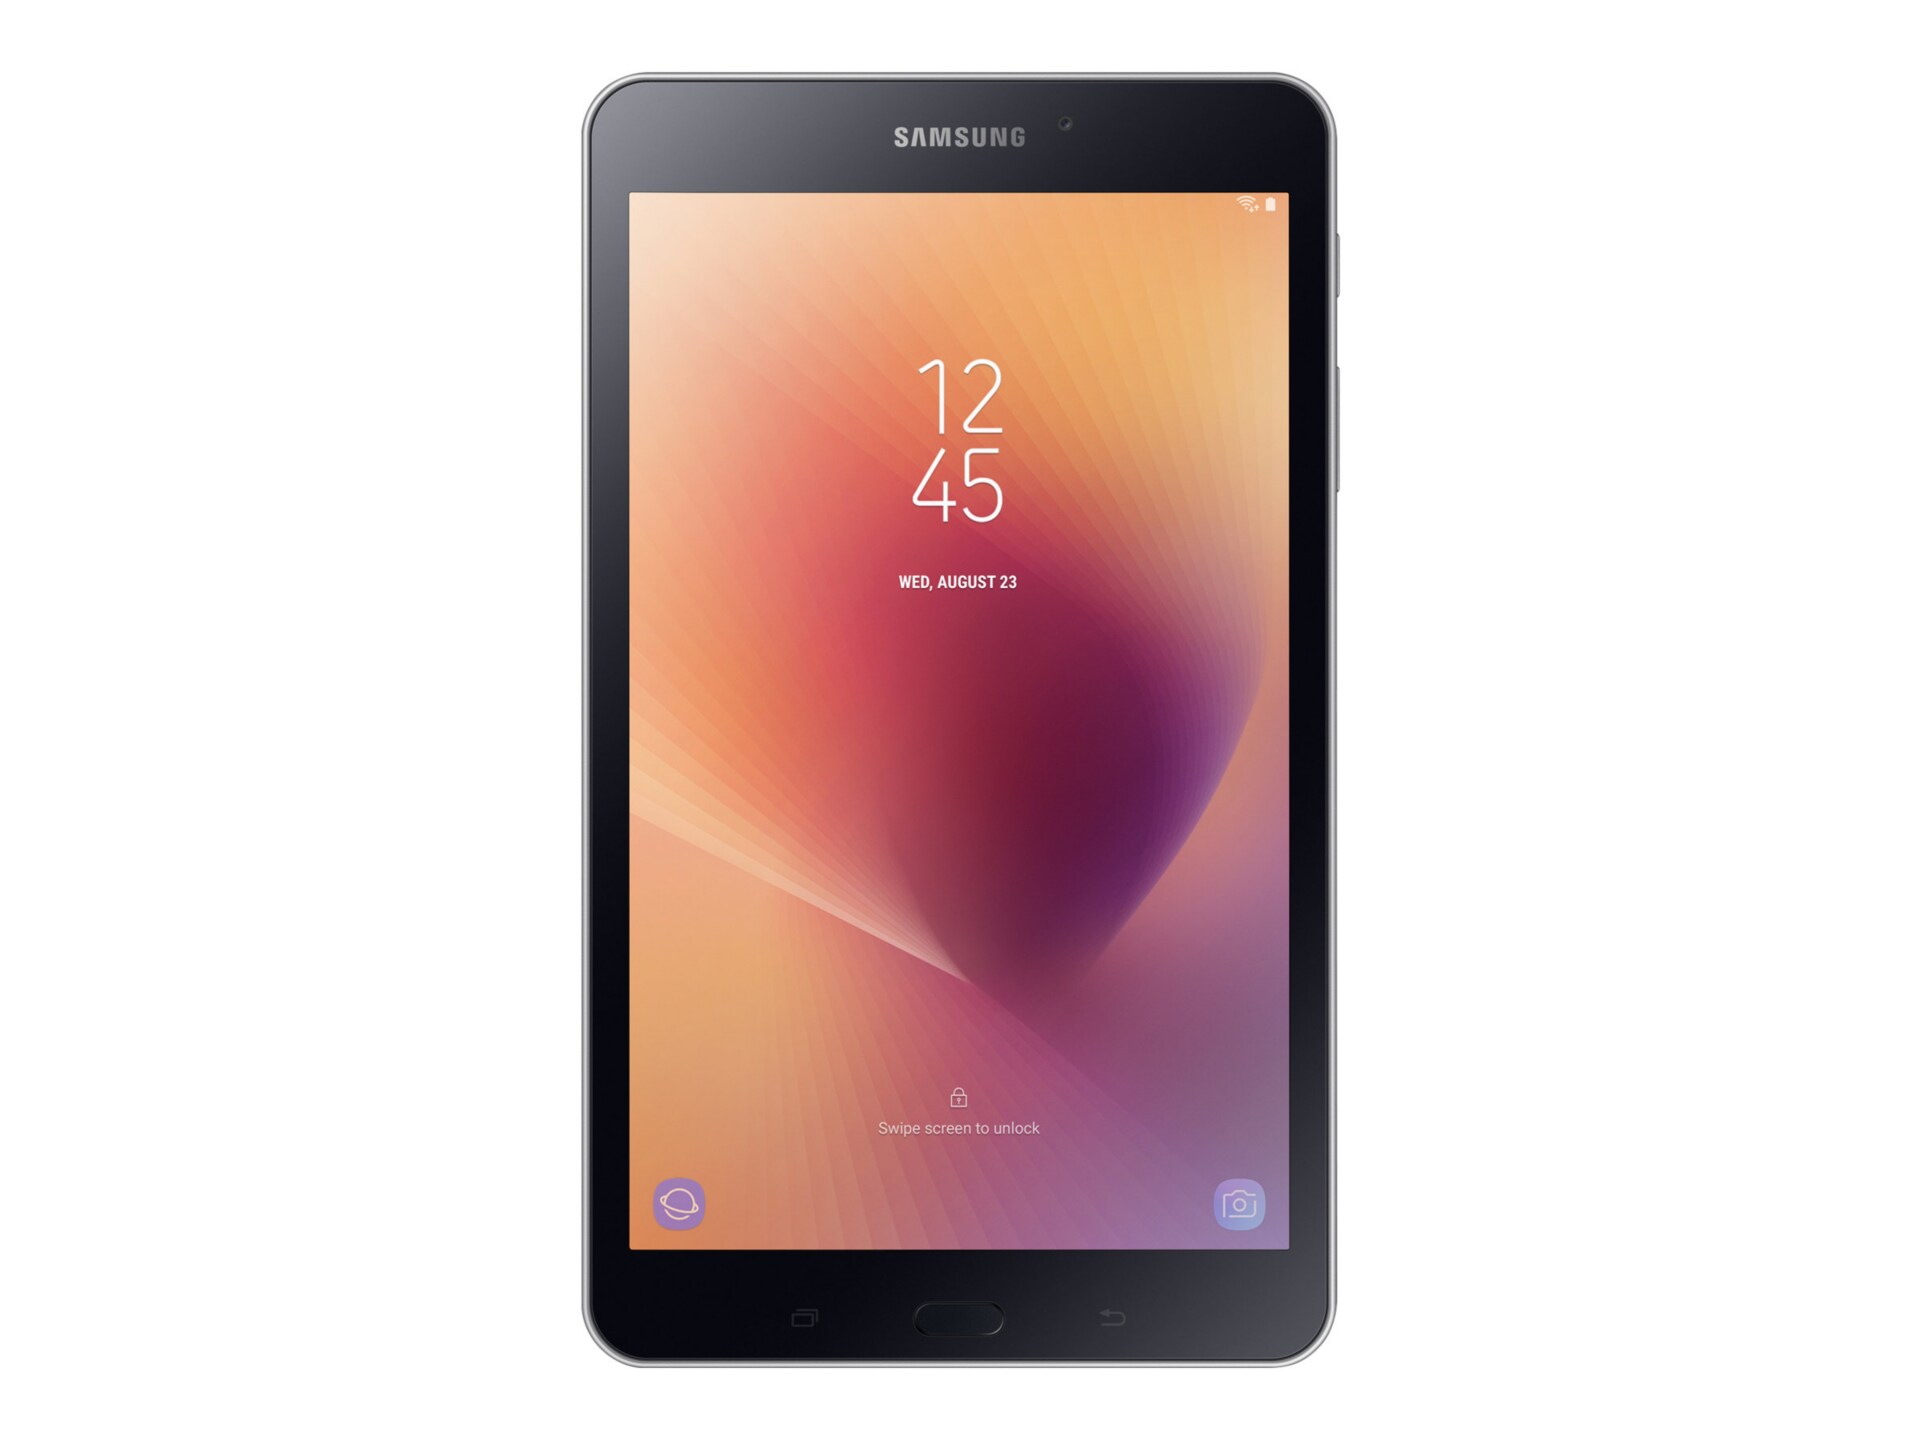 Samsung Galaxy Tab A (2017) - tablet - Android 7.1 (Nougat) - 16 GB - 8"